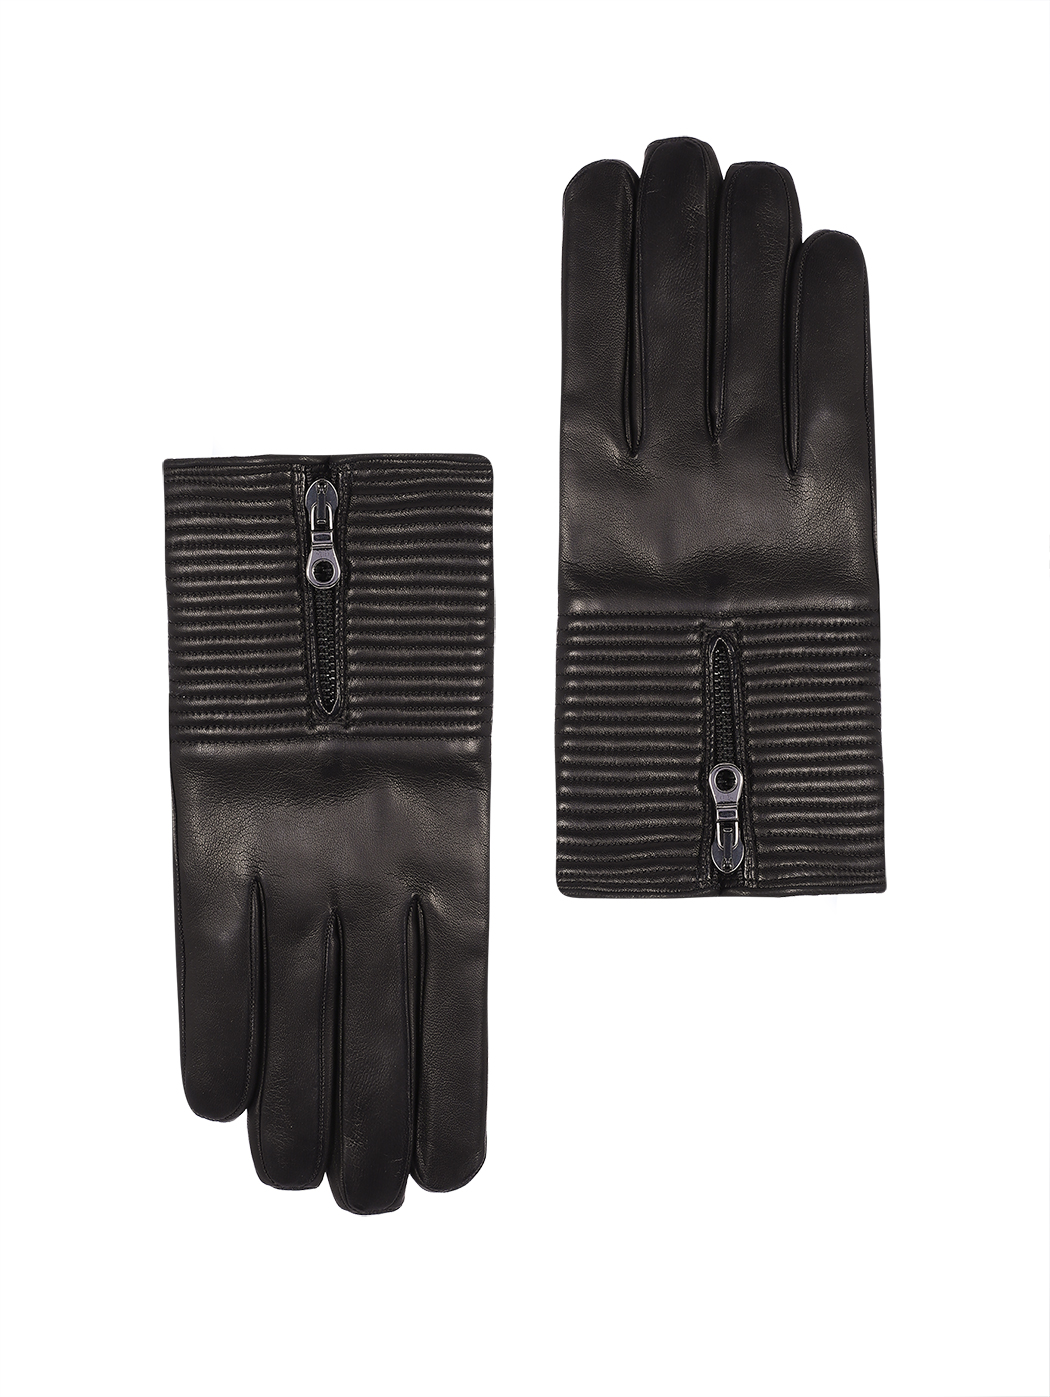 Black men's leather gloves